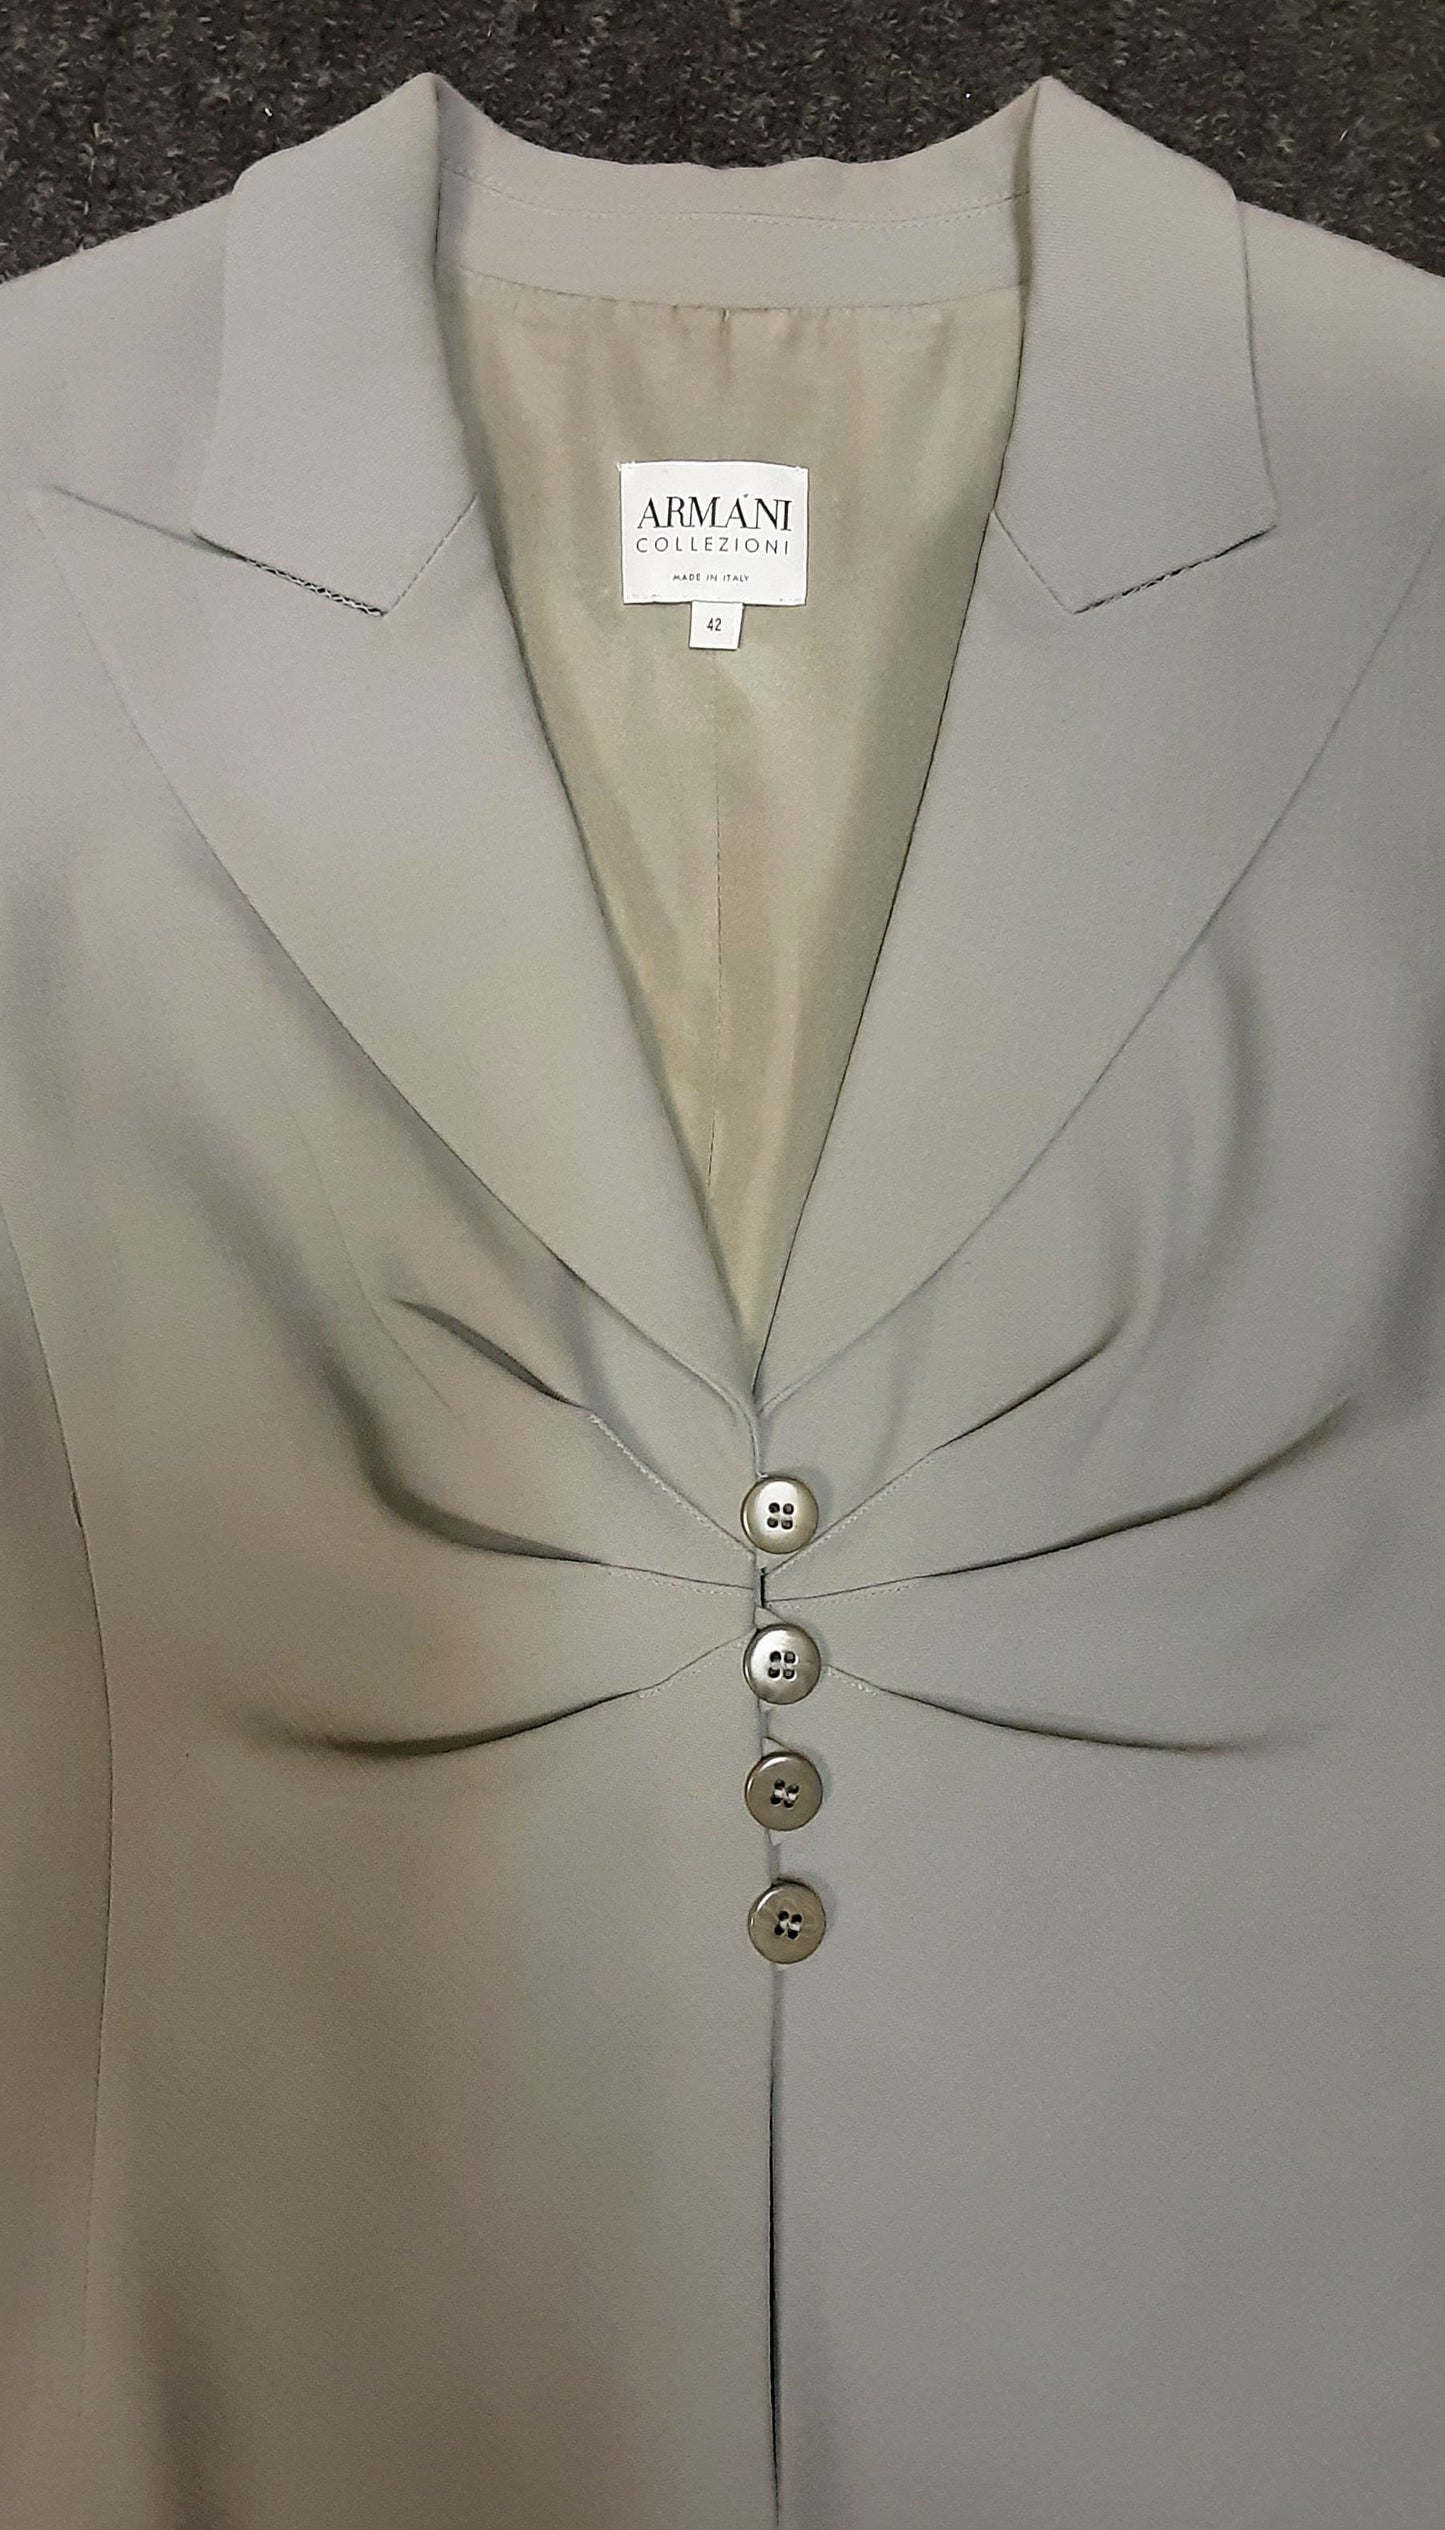 Armani Collezioni Grey Wool and Viscose Suit size M